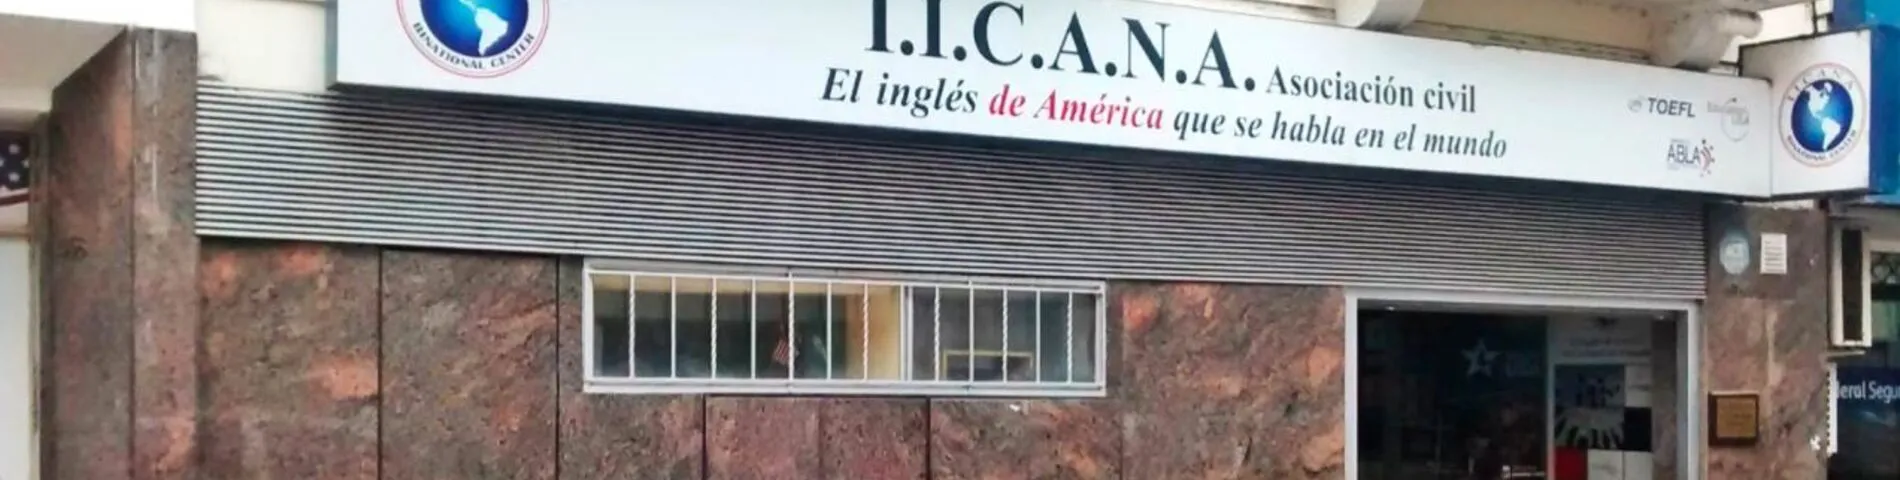 IICANA - Instituto de Intercambio Cultural Argentino Norteamericano immagine 1